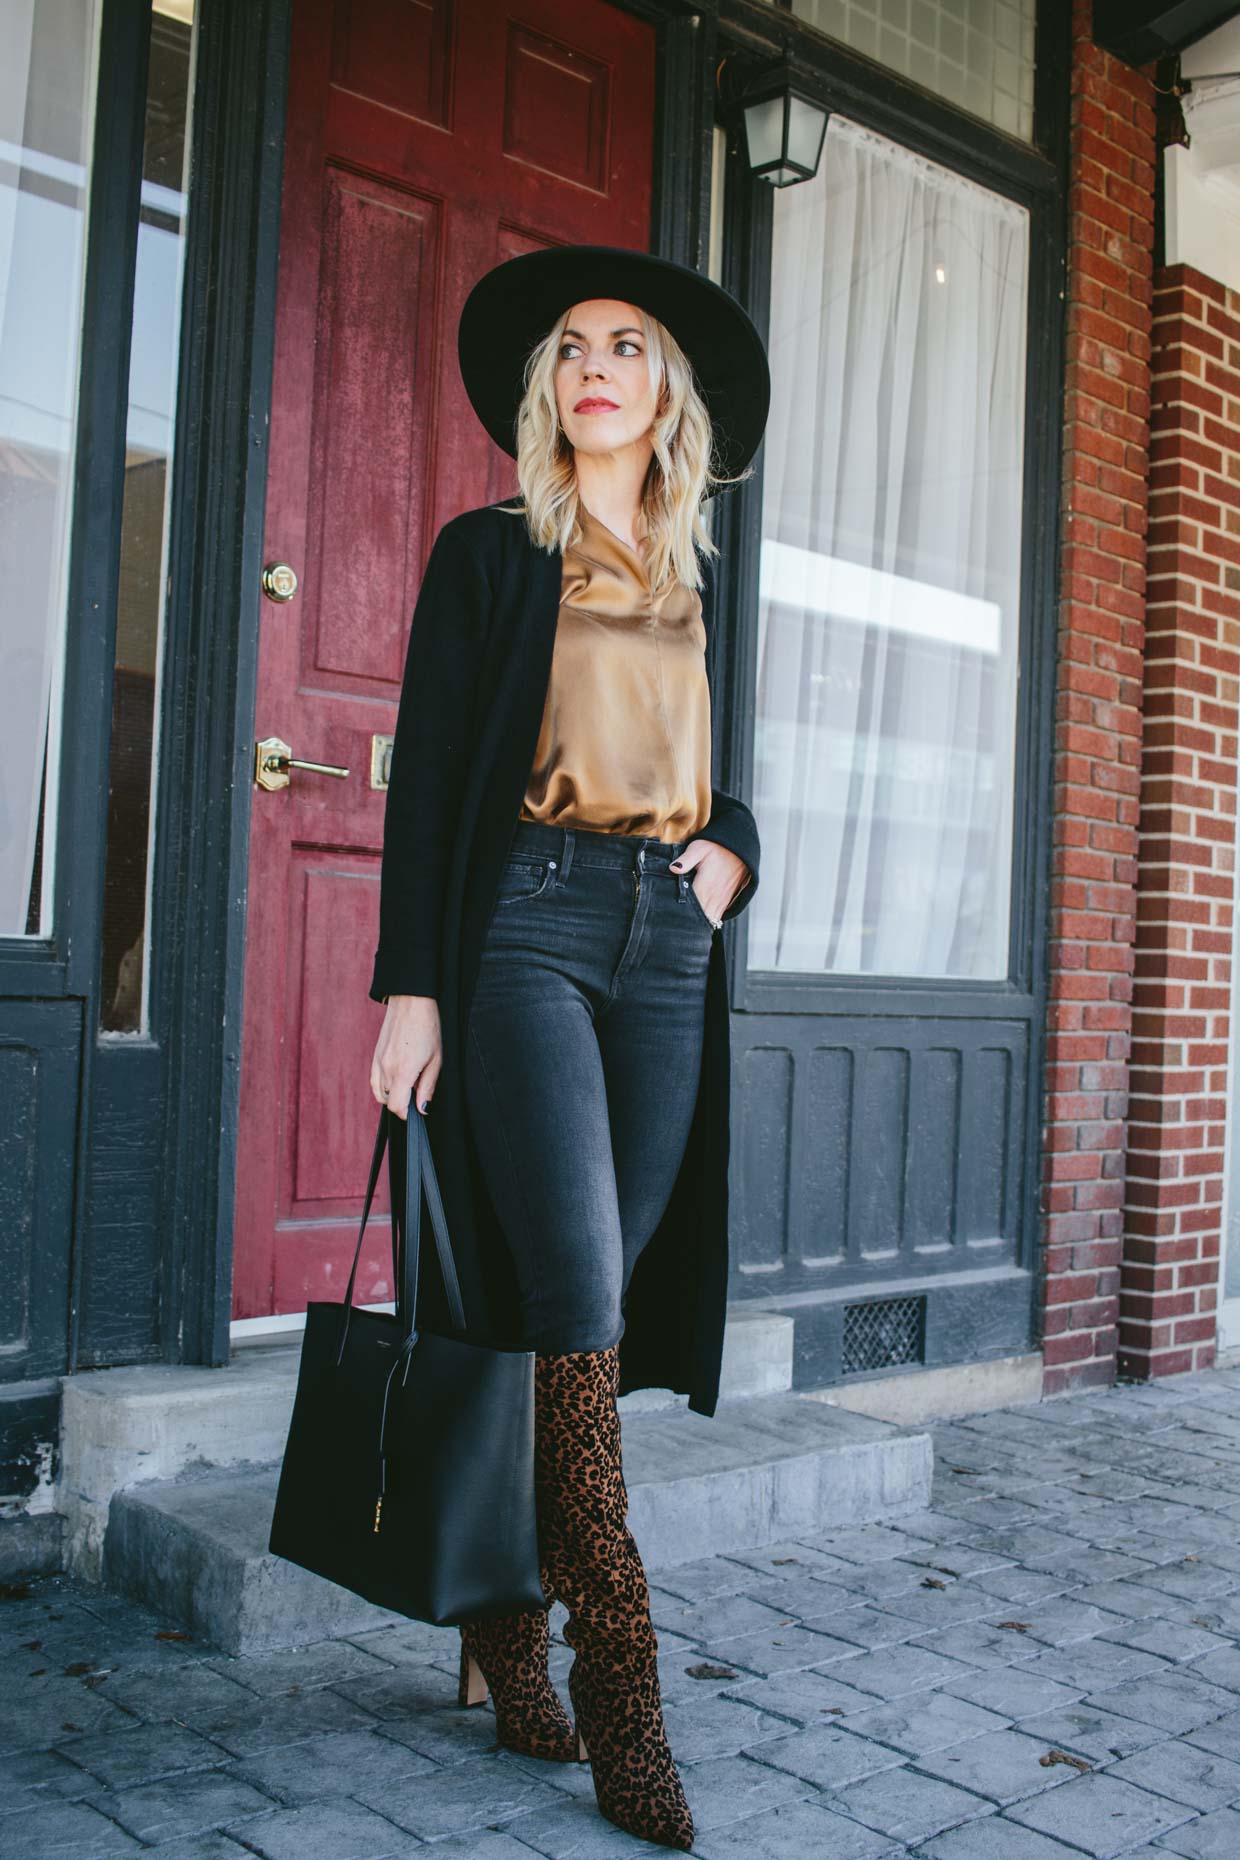 Meagan Brandon fashion blogger of Meagan's Moda shares chic and